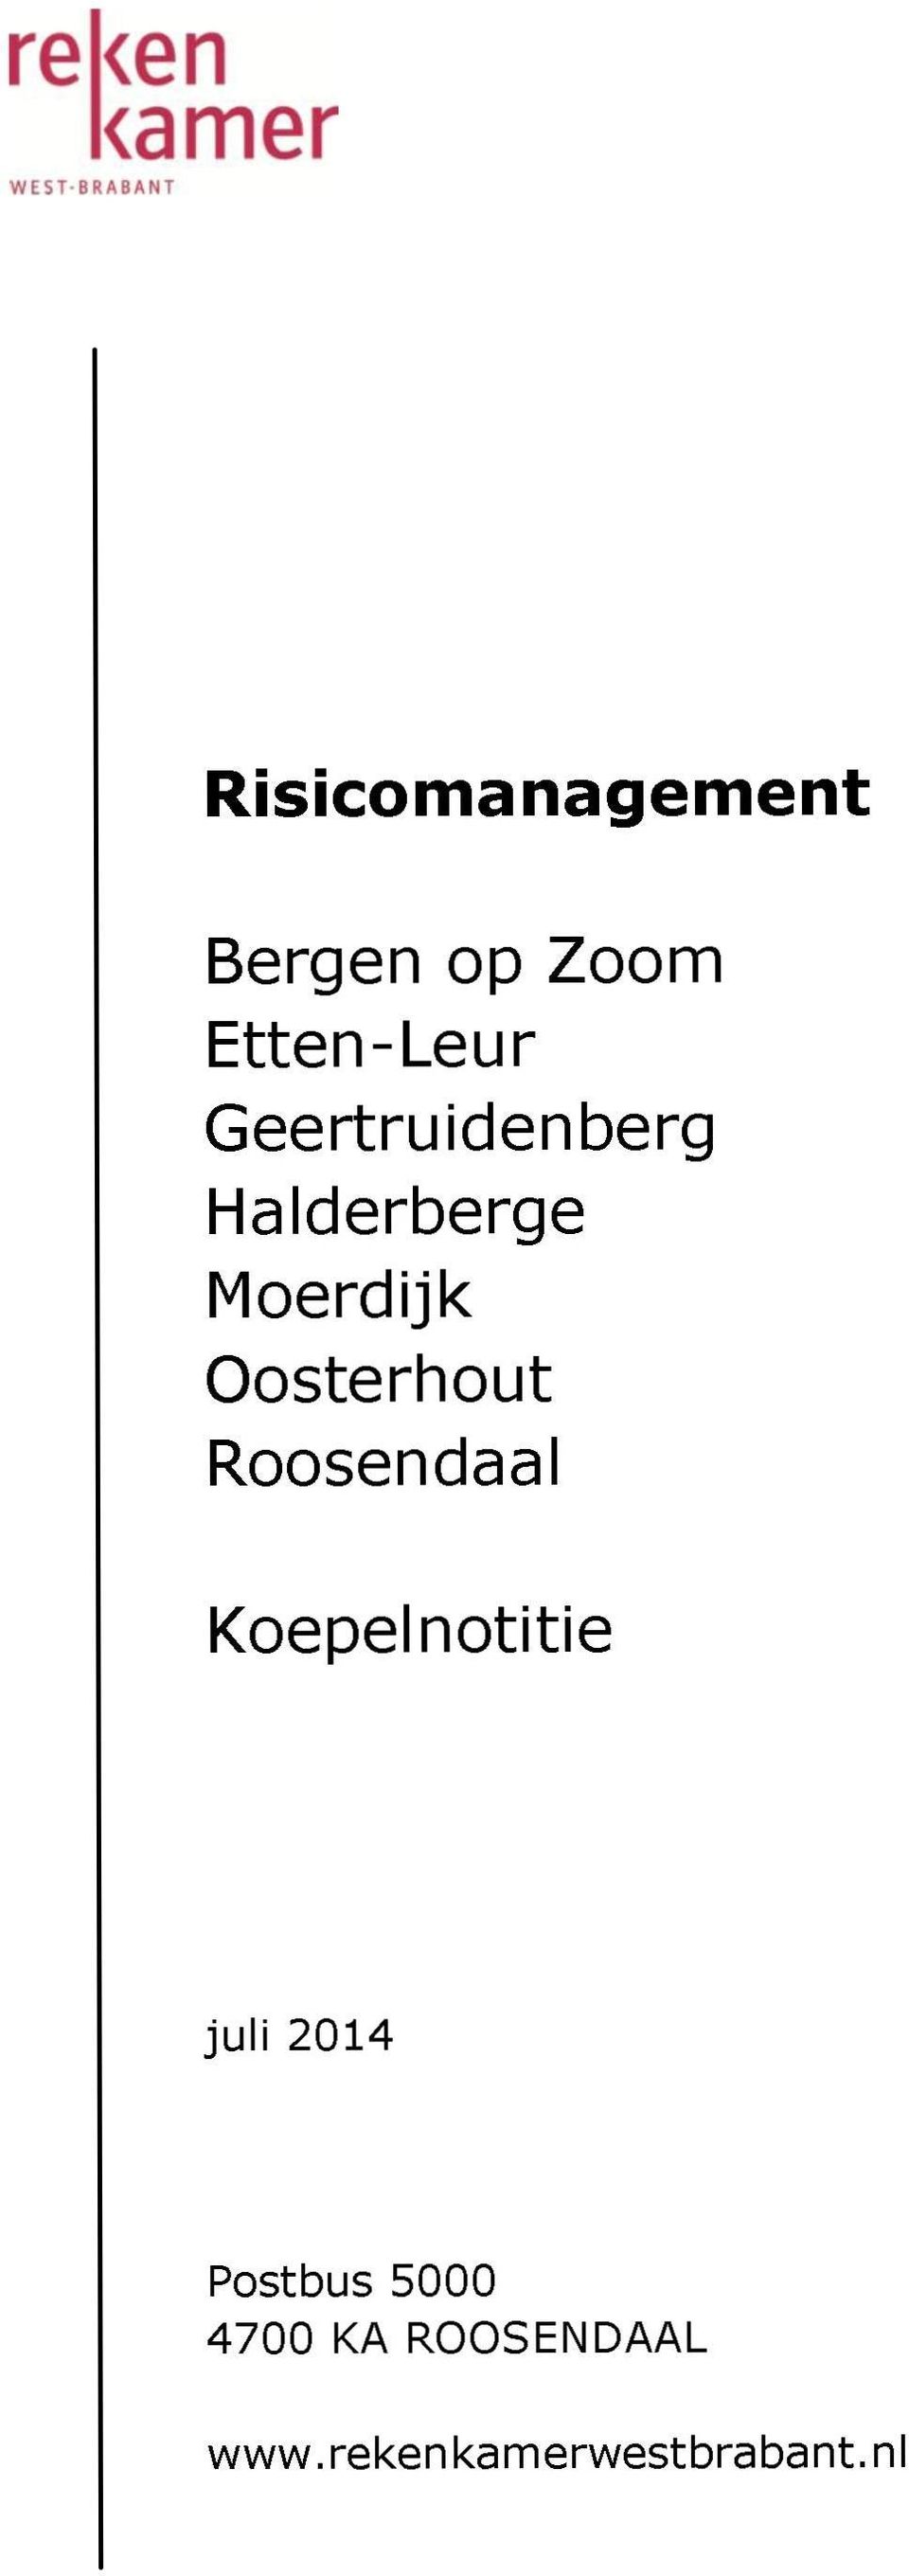 Oosterhout Roosendaal Koepelnotitie juli 2014